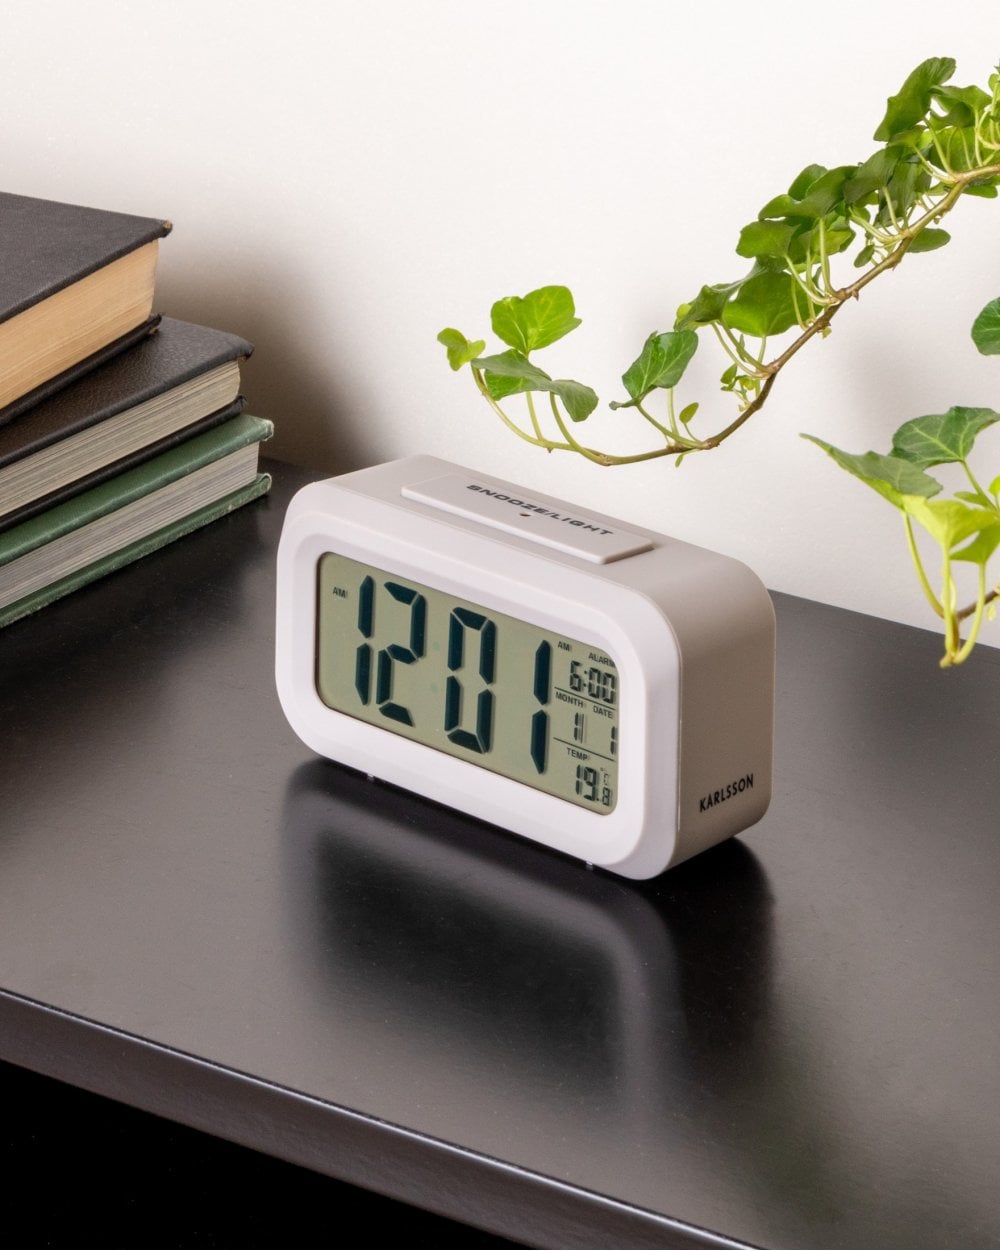 Alarm Clock Jolly Warm Grey